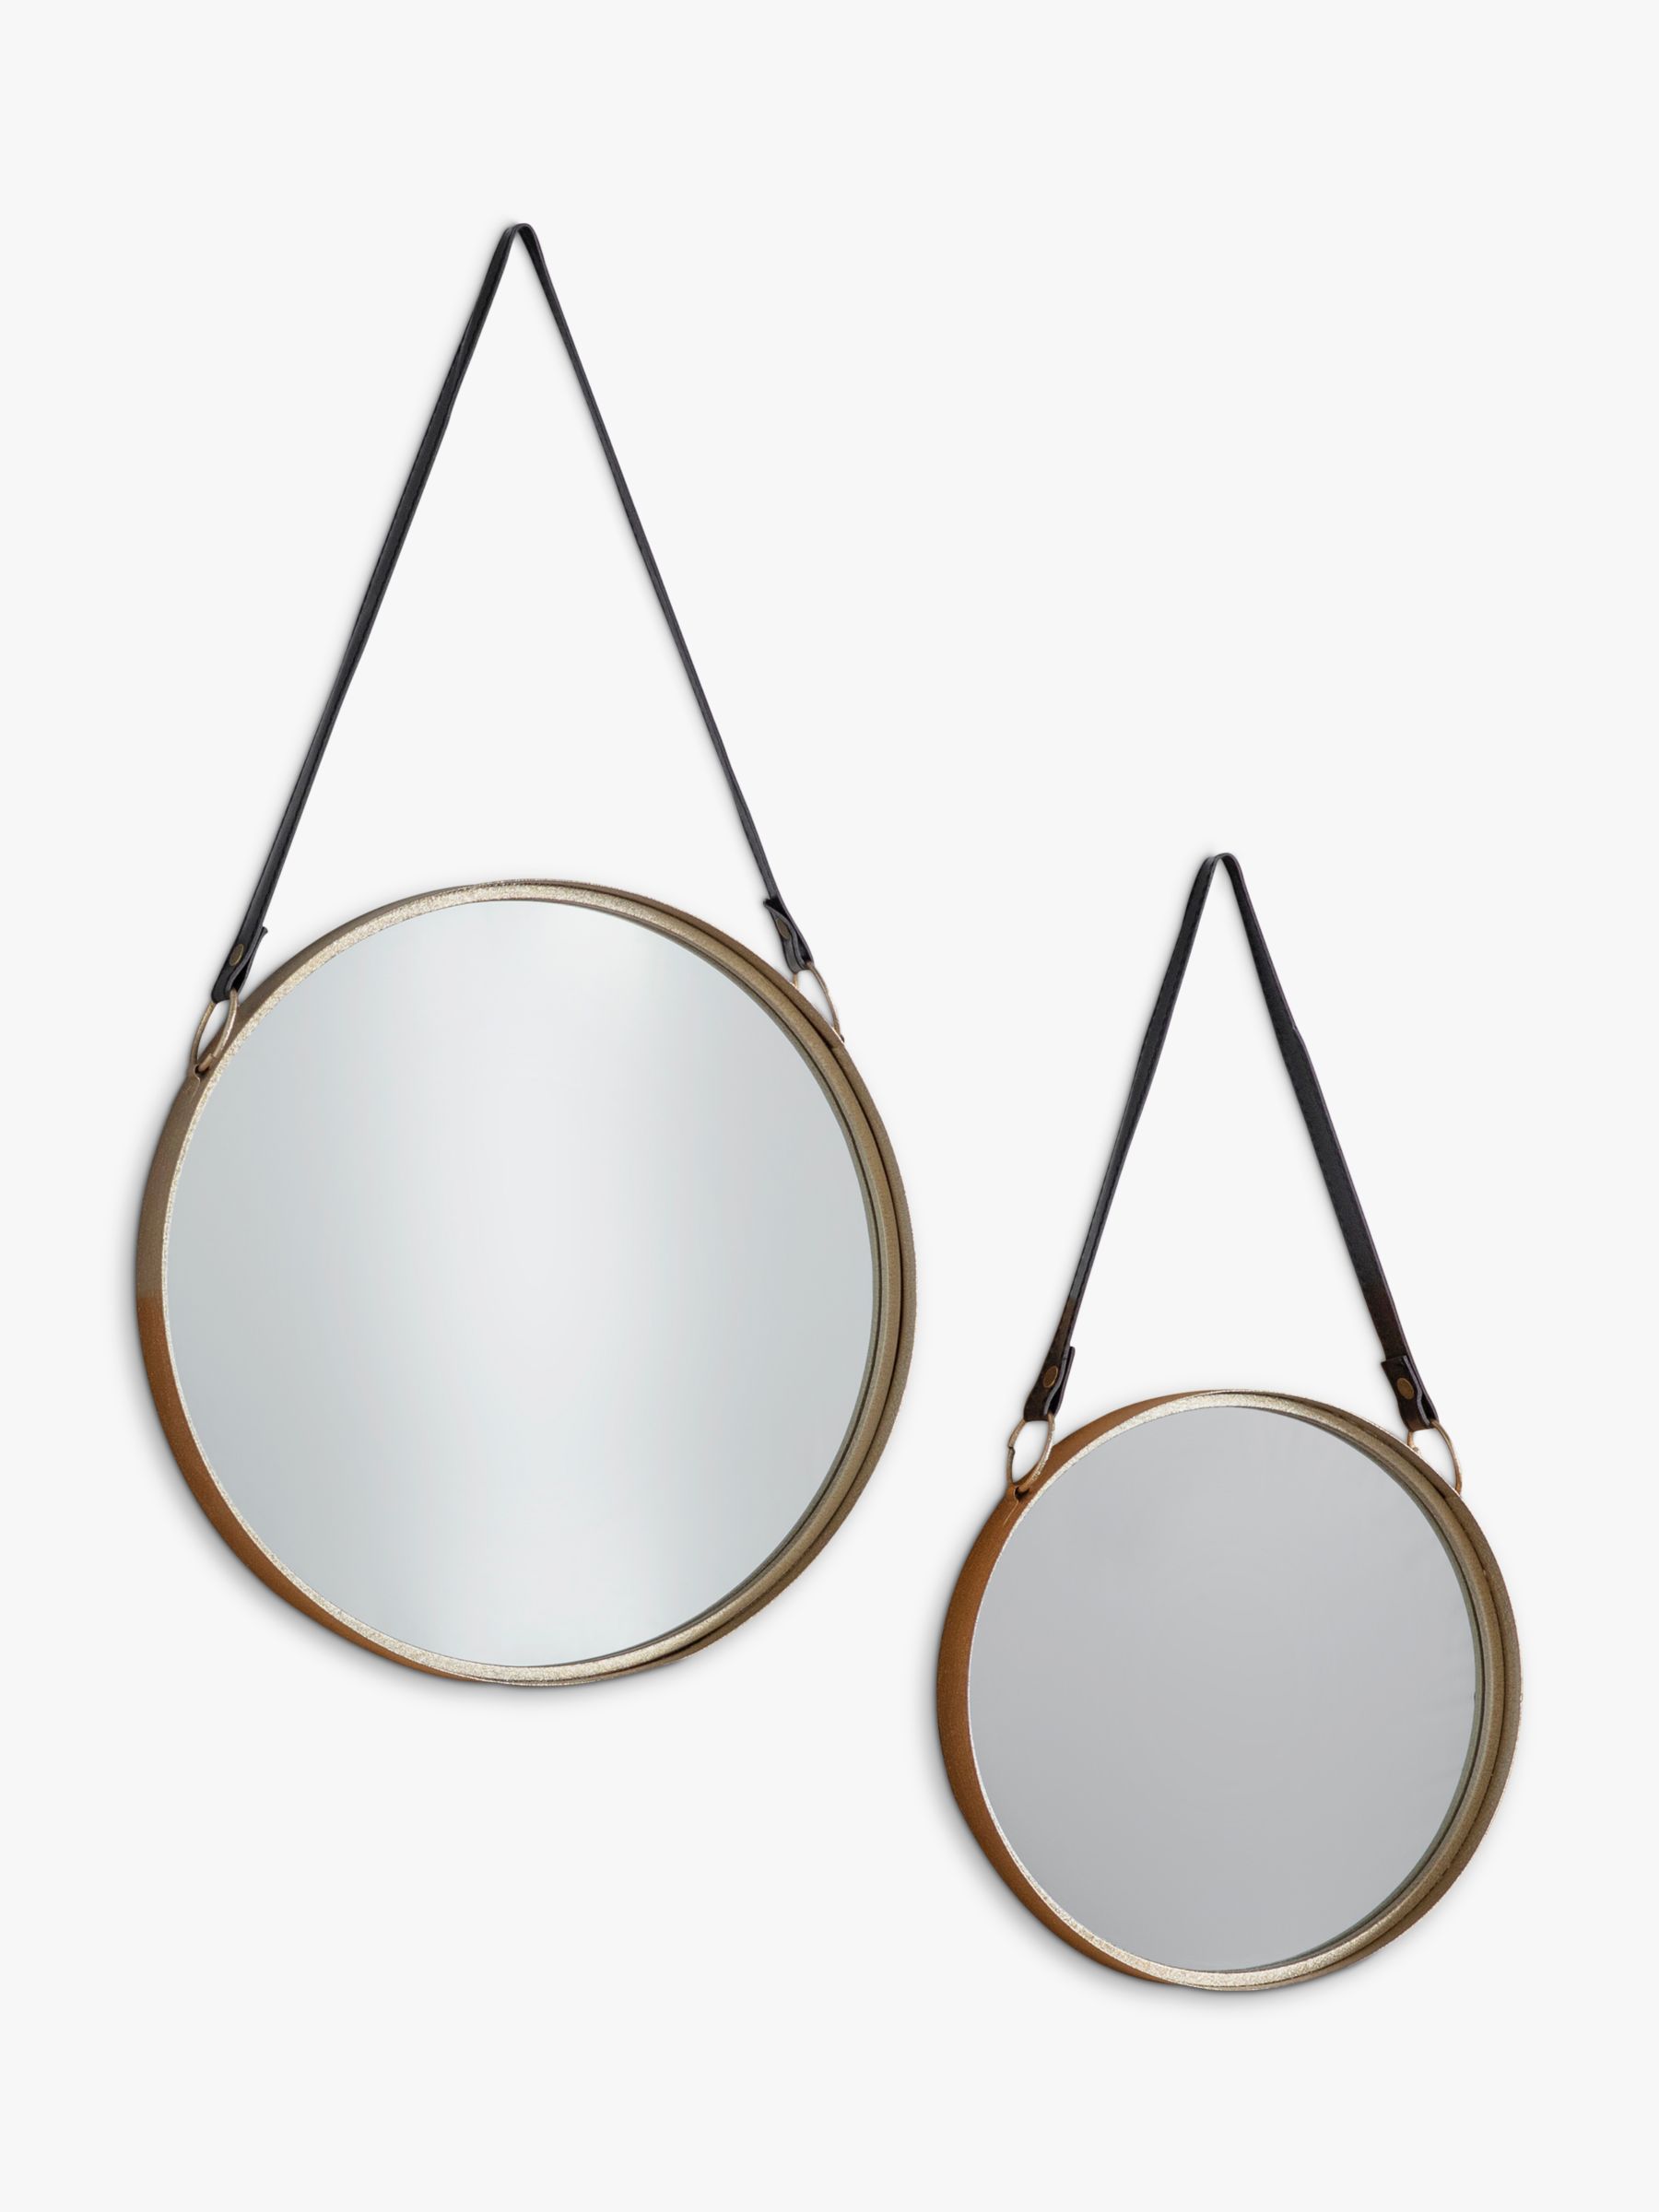 Marston Round Metal Frame Hanging, Round Leather Mirror With Strap